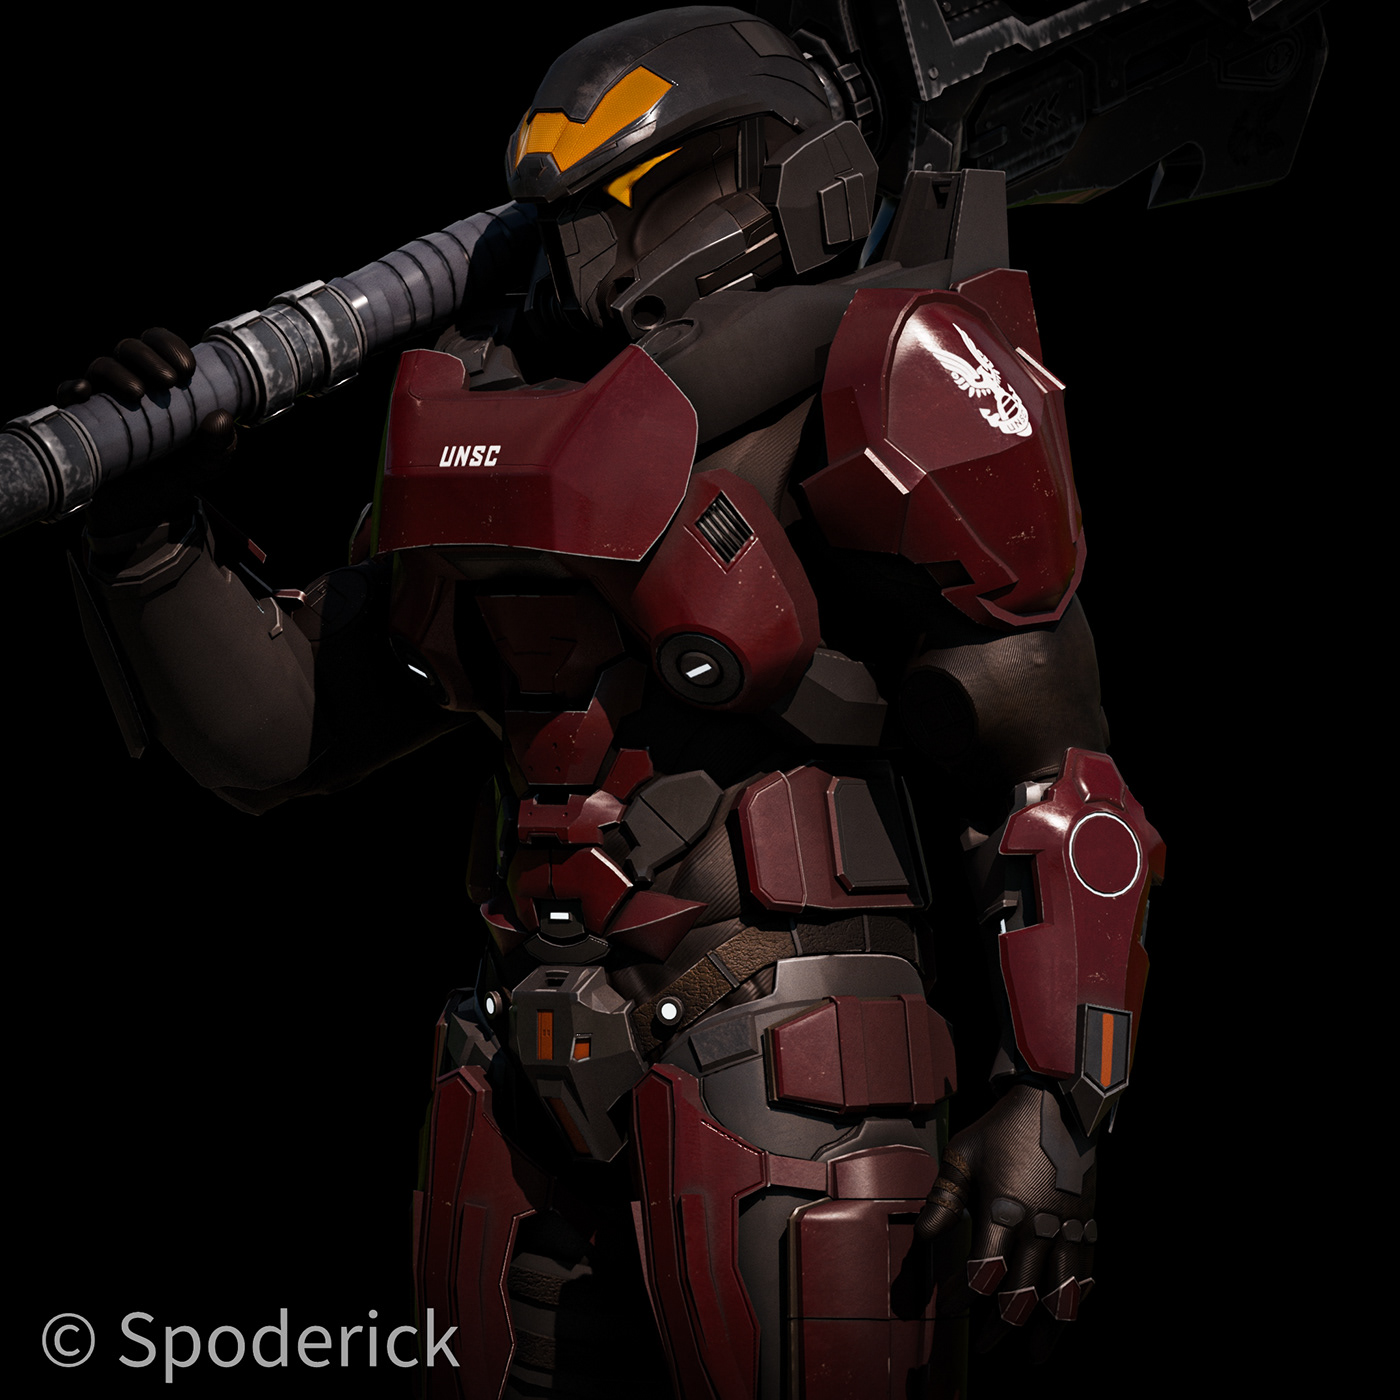 Halo sci-fi master chief Halo Infinite videogame Armor Space  Elite halo model